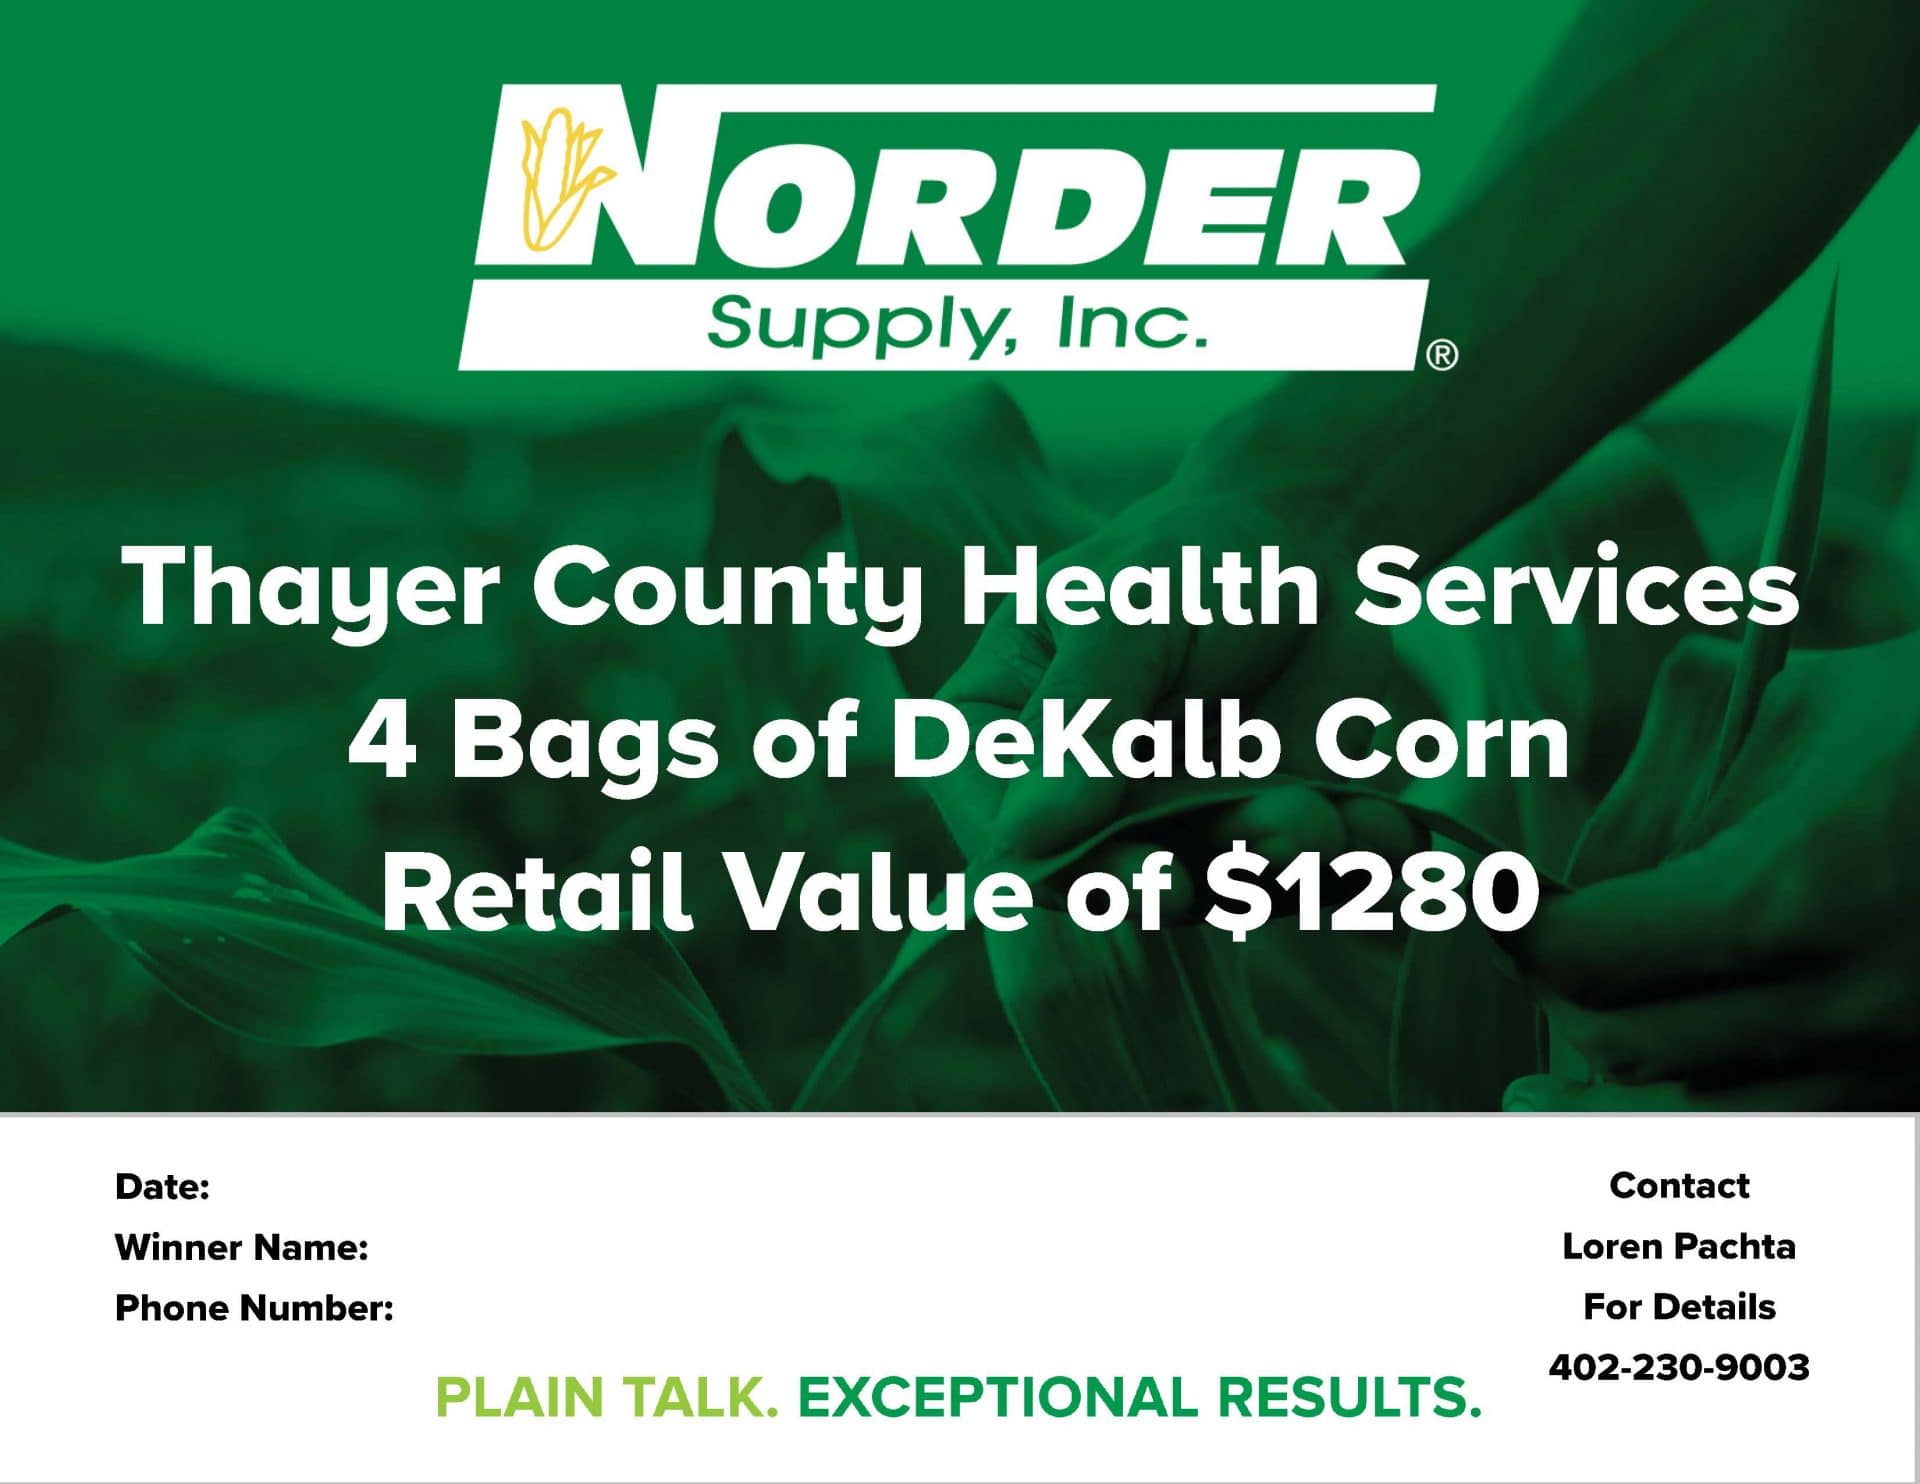 #19 DeKalb Corn seed - 4 bags